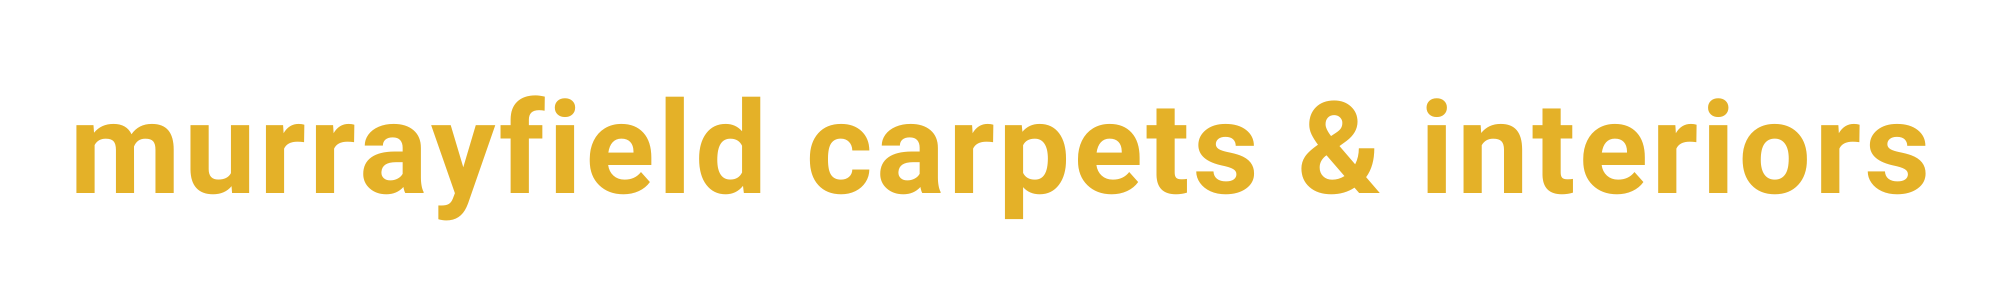 murrayfield carpets & interiors @